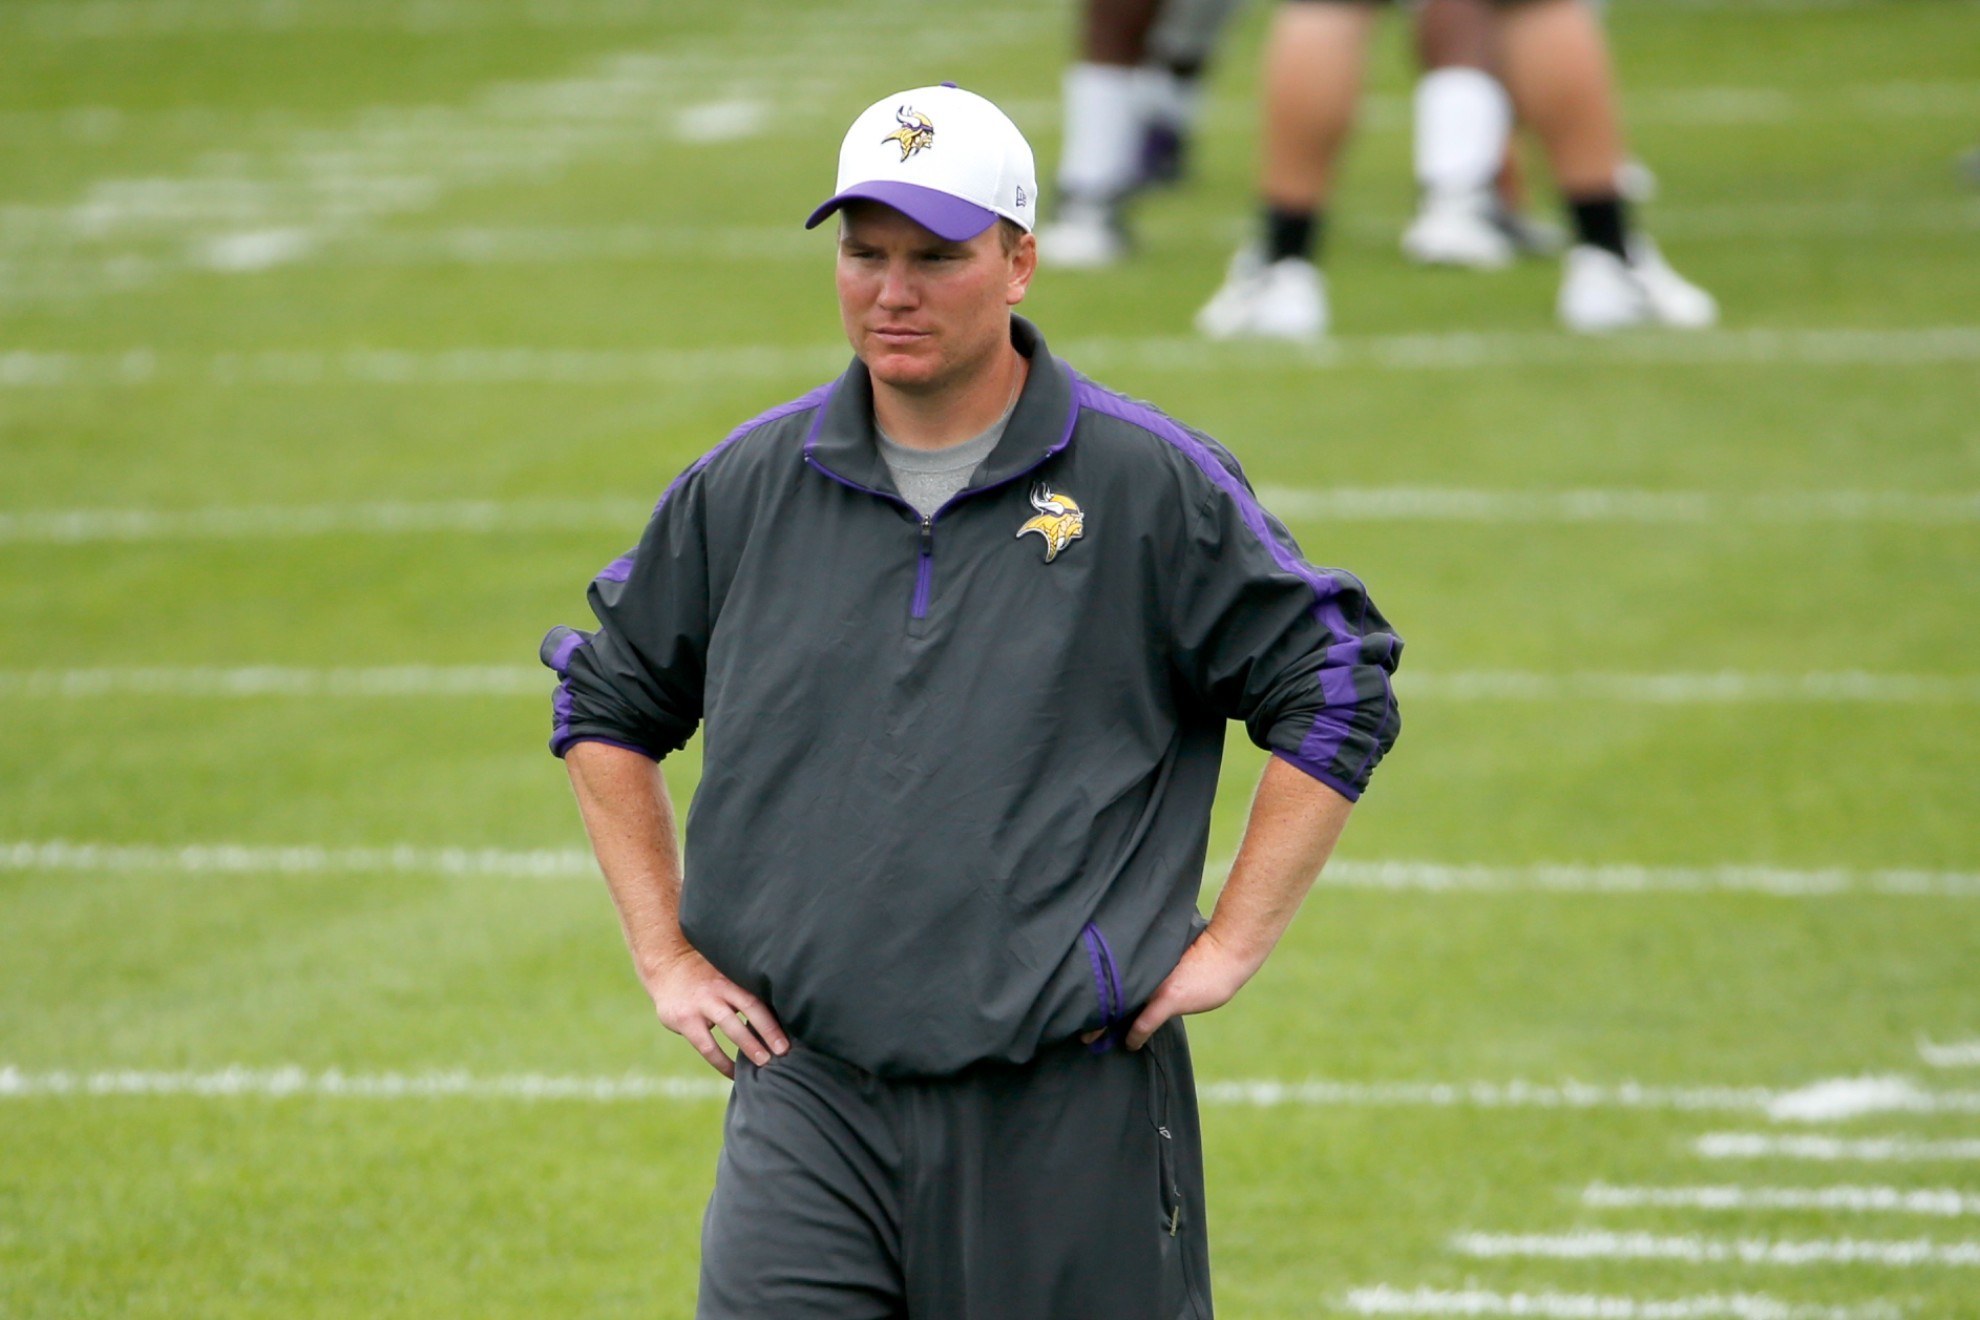 Minnesota Vikings defensive backs coach Adam Zimmer watches practice at an NFL football training camp.